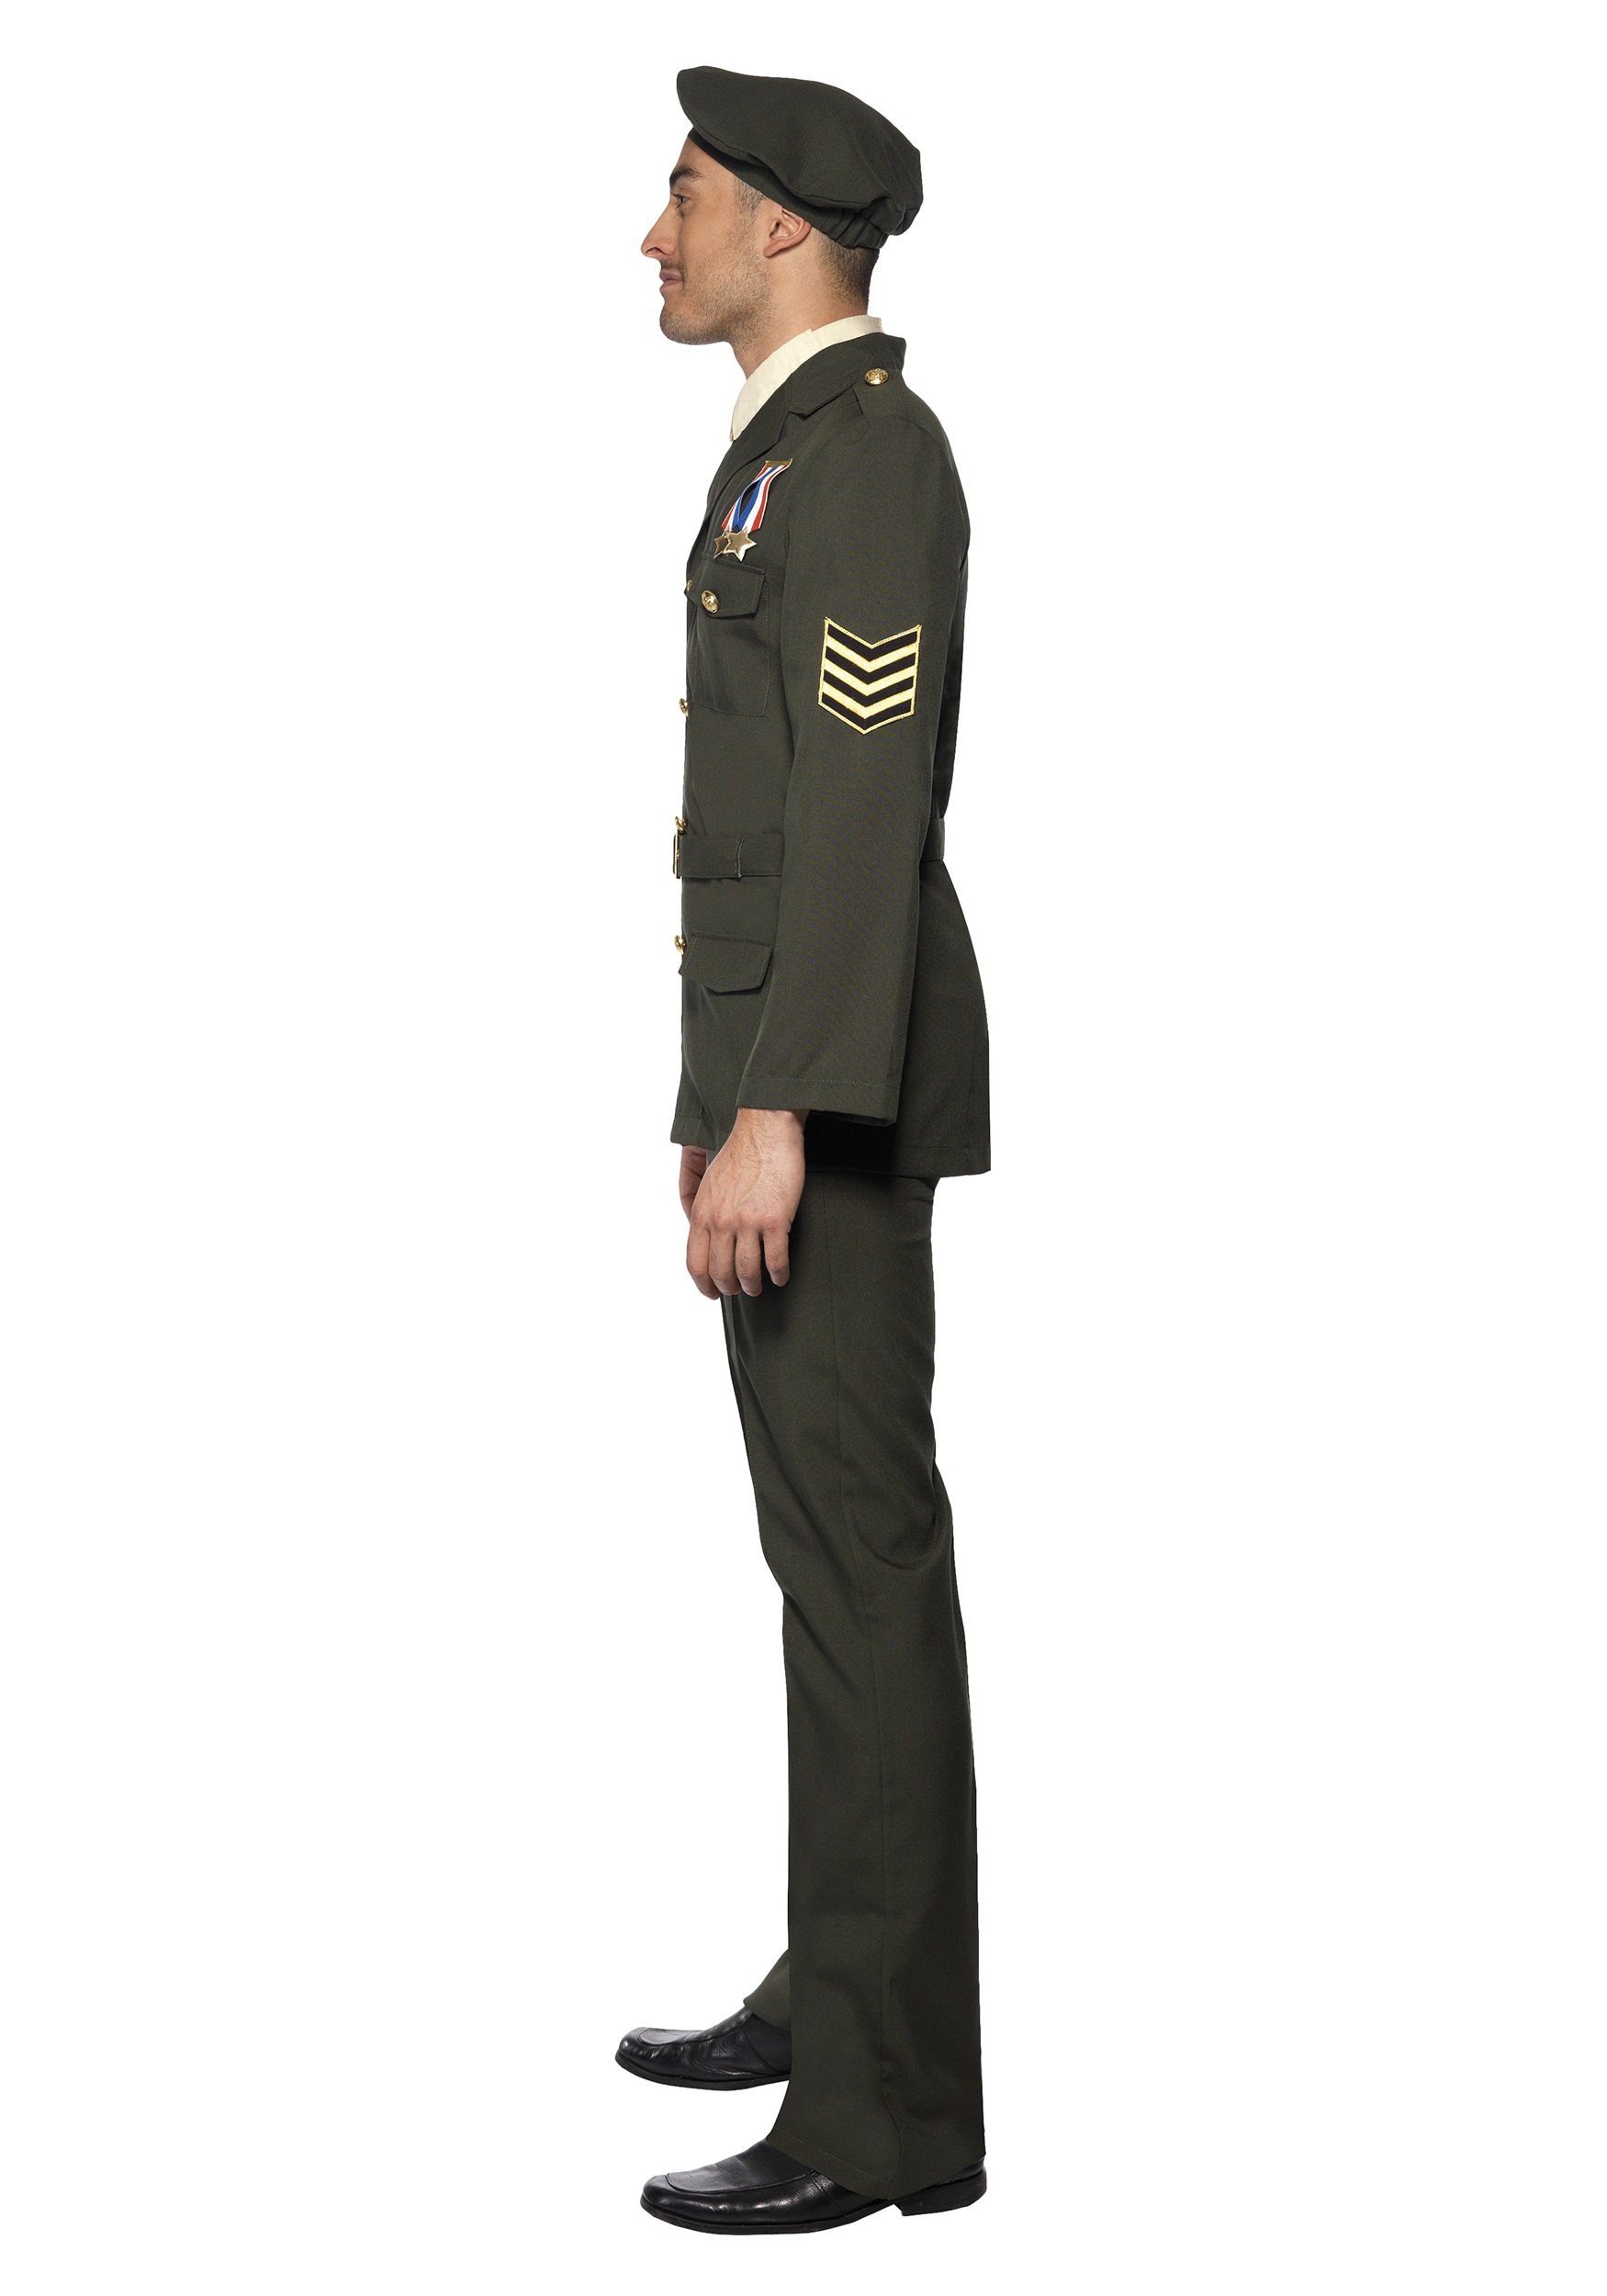 Wartime Officer Uniform